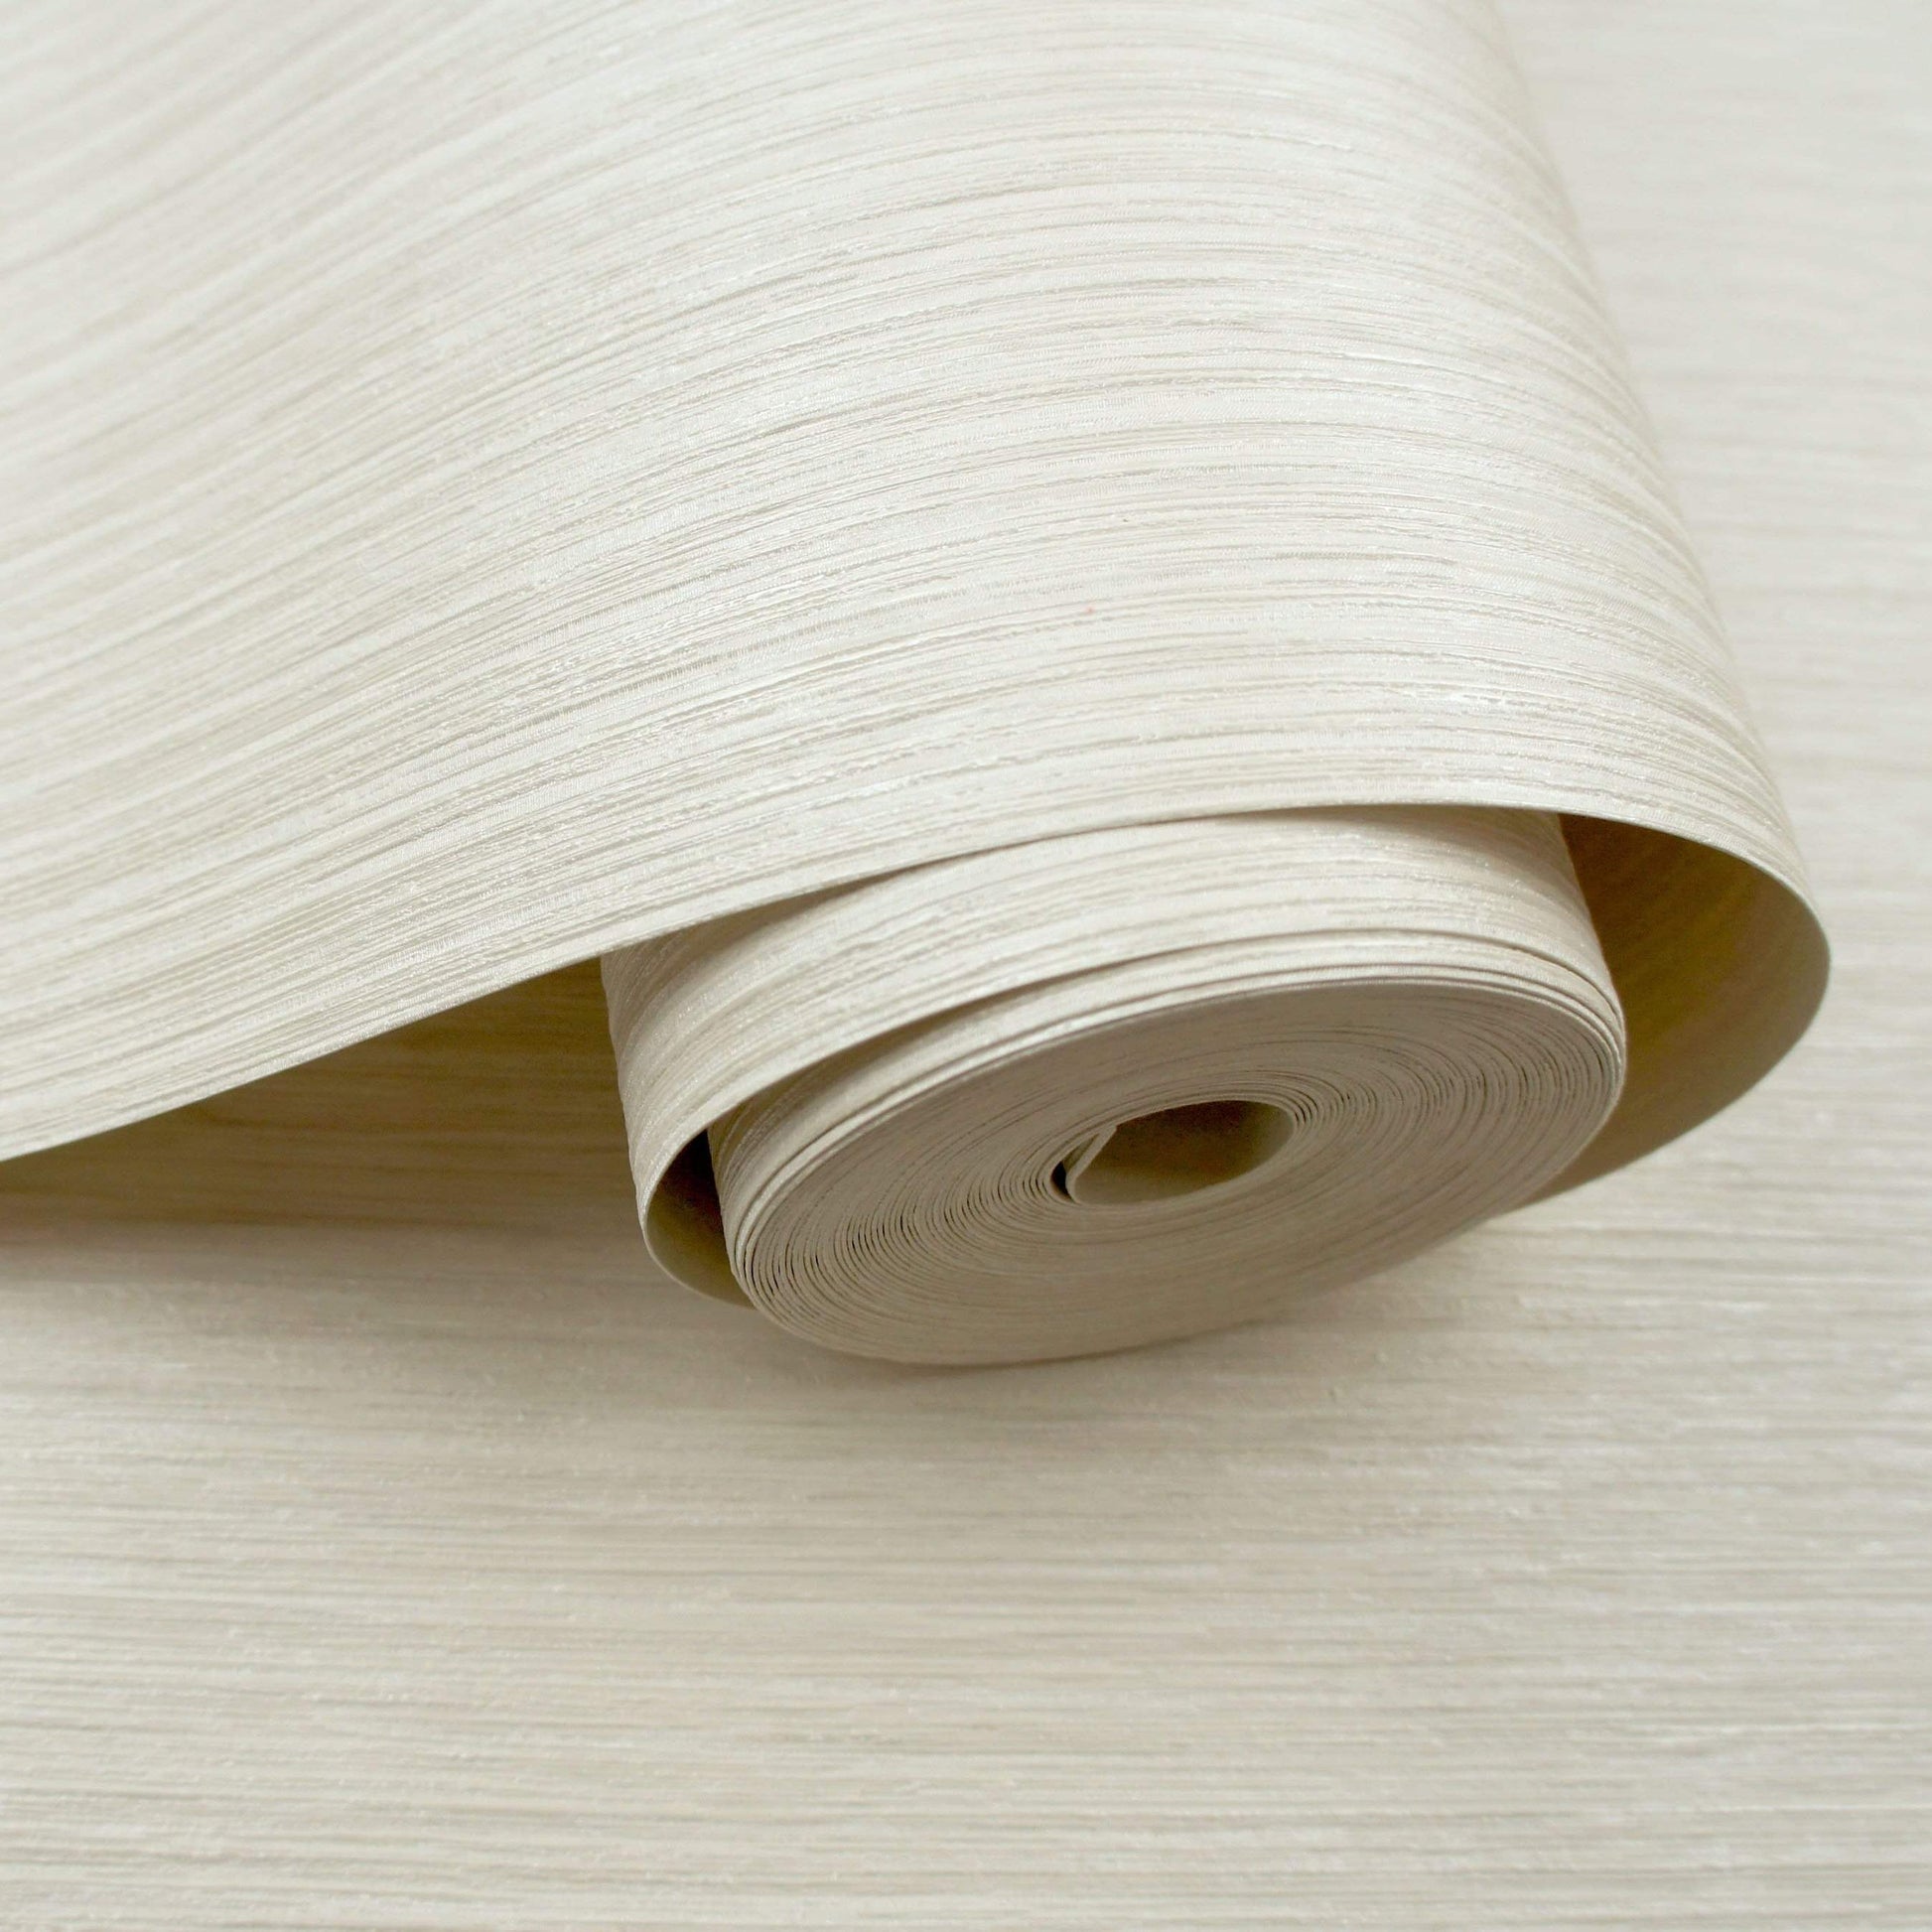 Wallpaper  -  Holden Fargesia Texture Dove Wallpaper - 36095  -  60001752